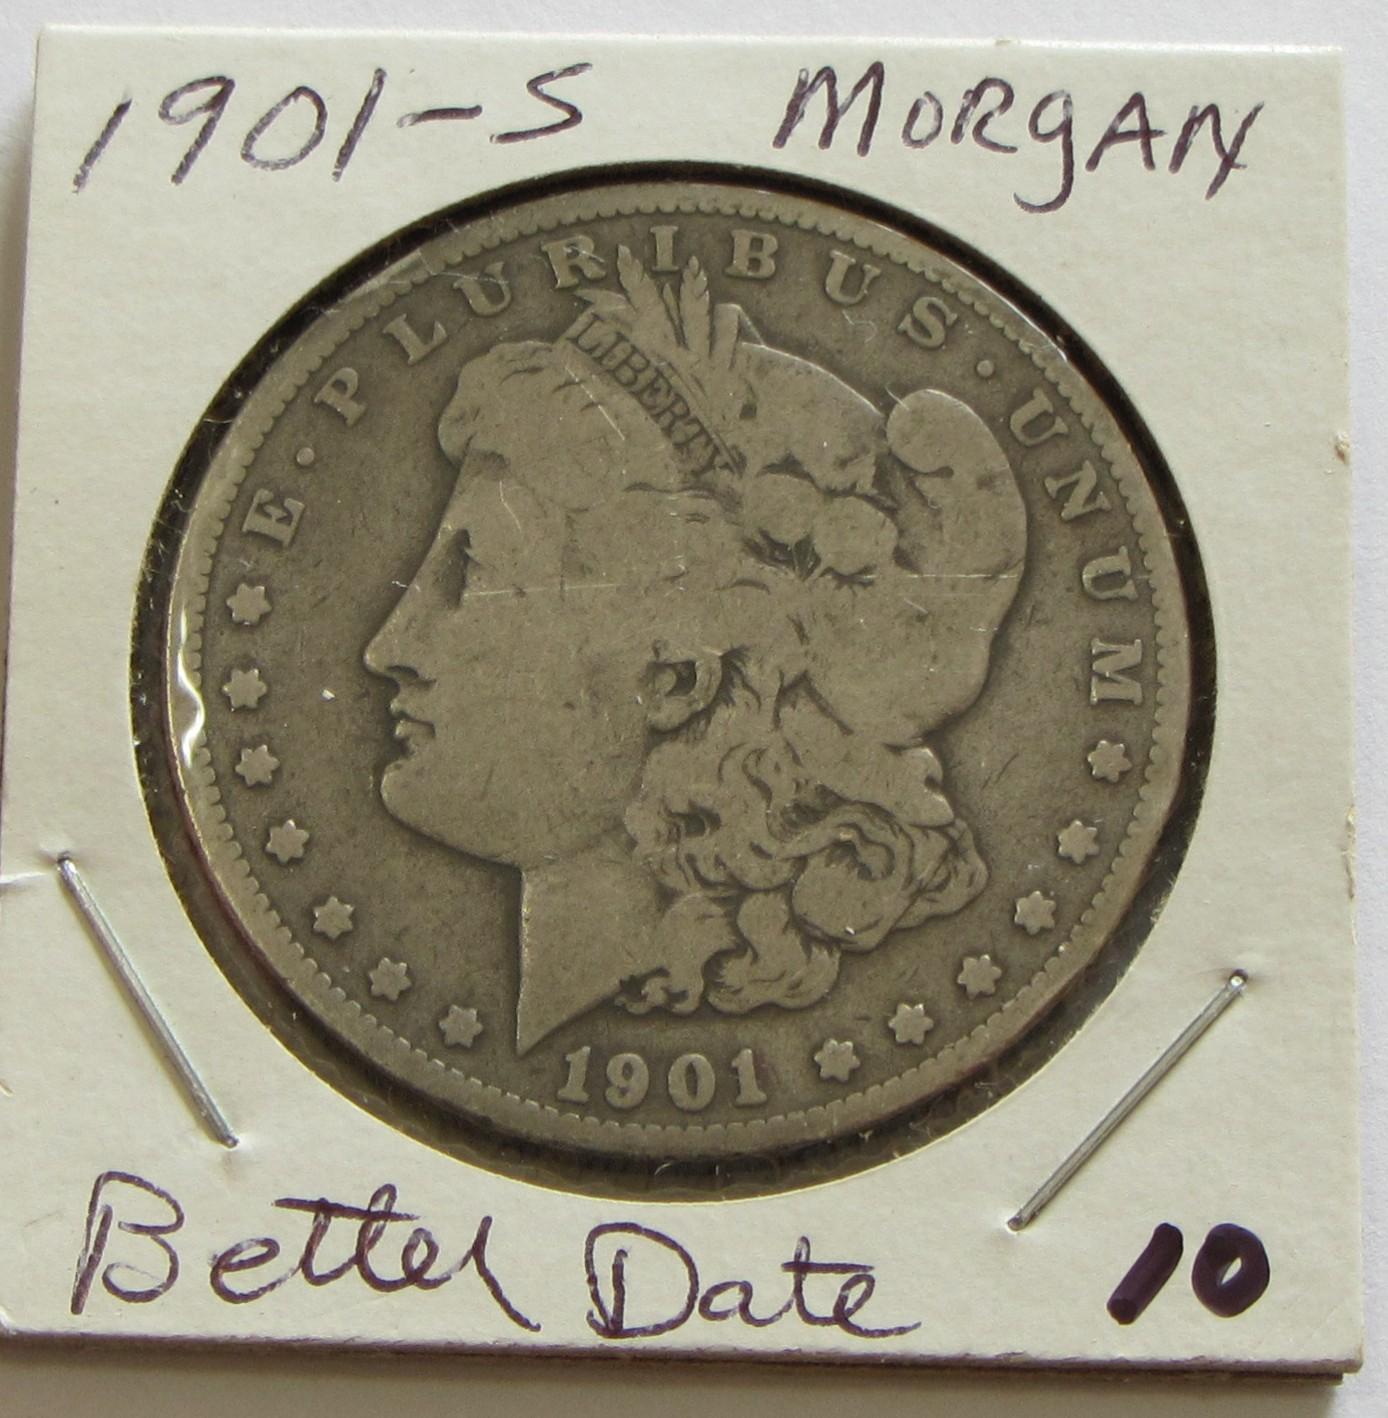 $1 1901-S MORGAN SILVER DOLLAR BETTER DATE